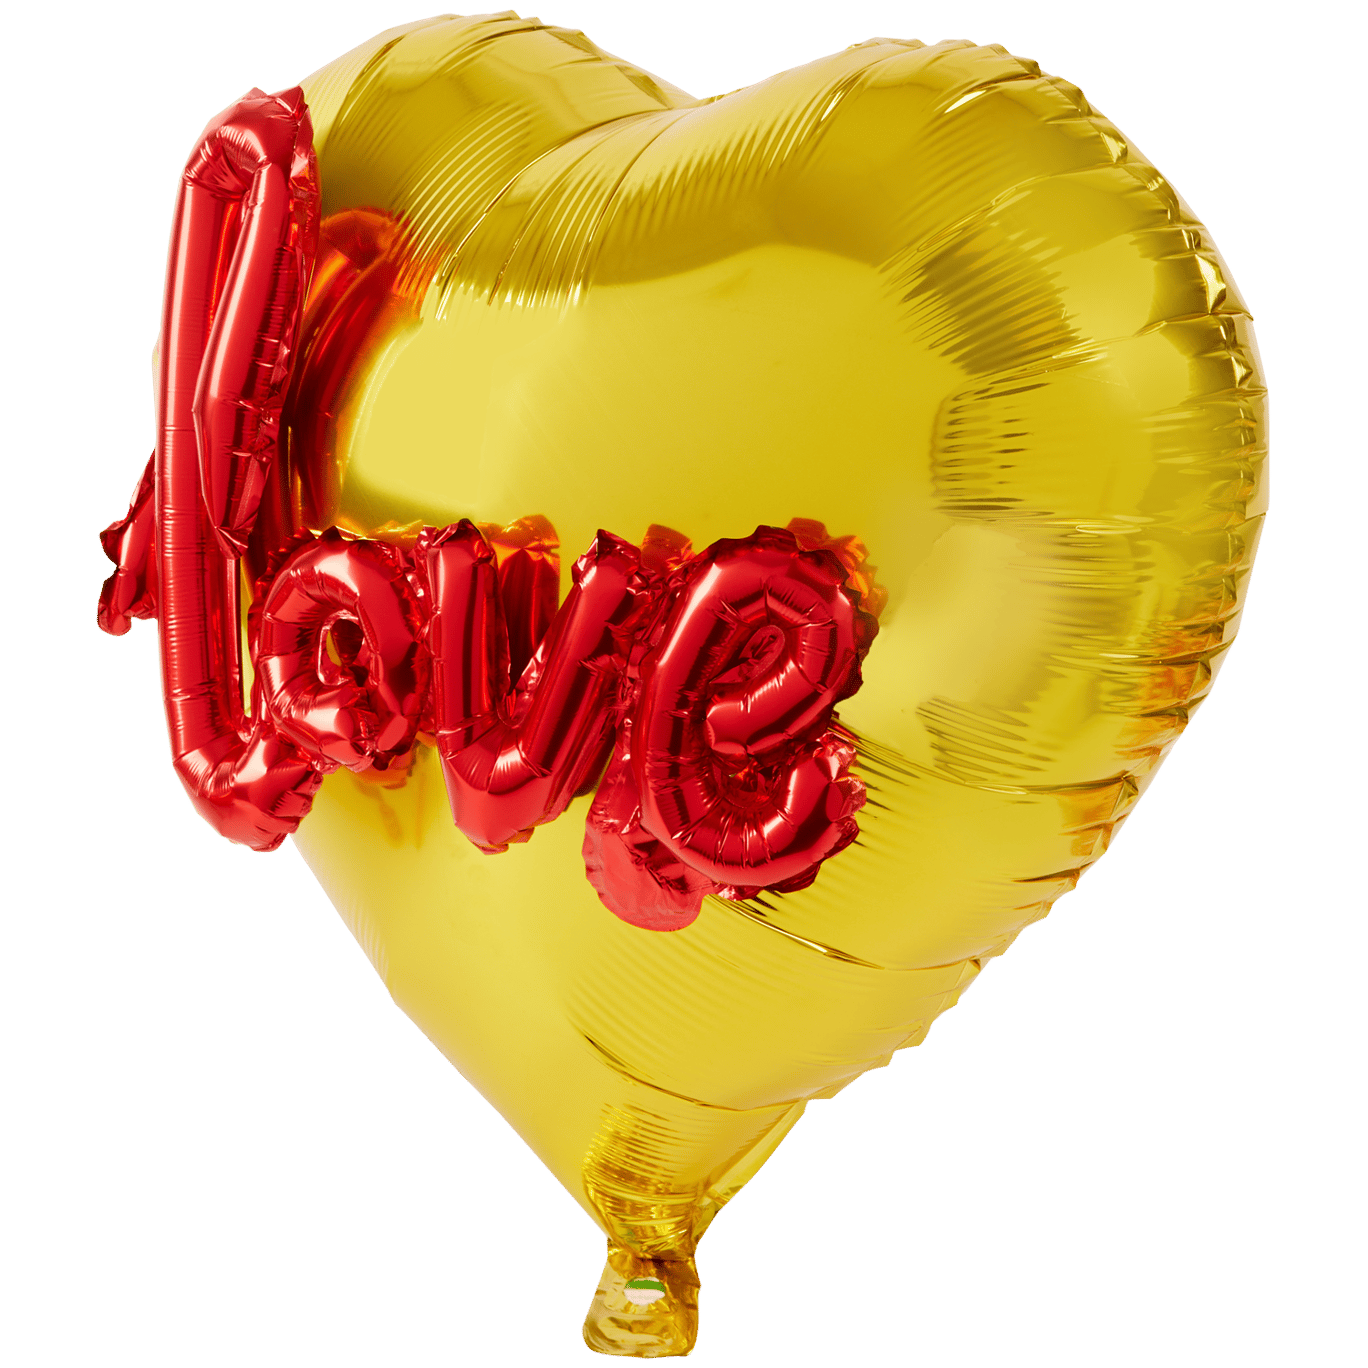 Folieballon hart